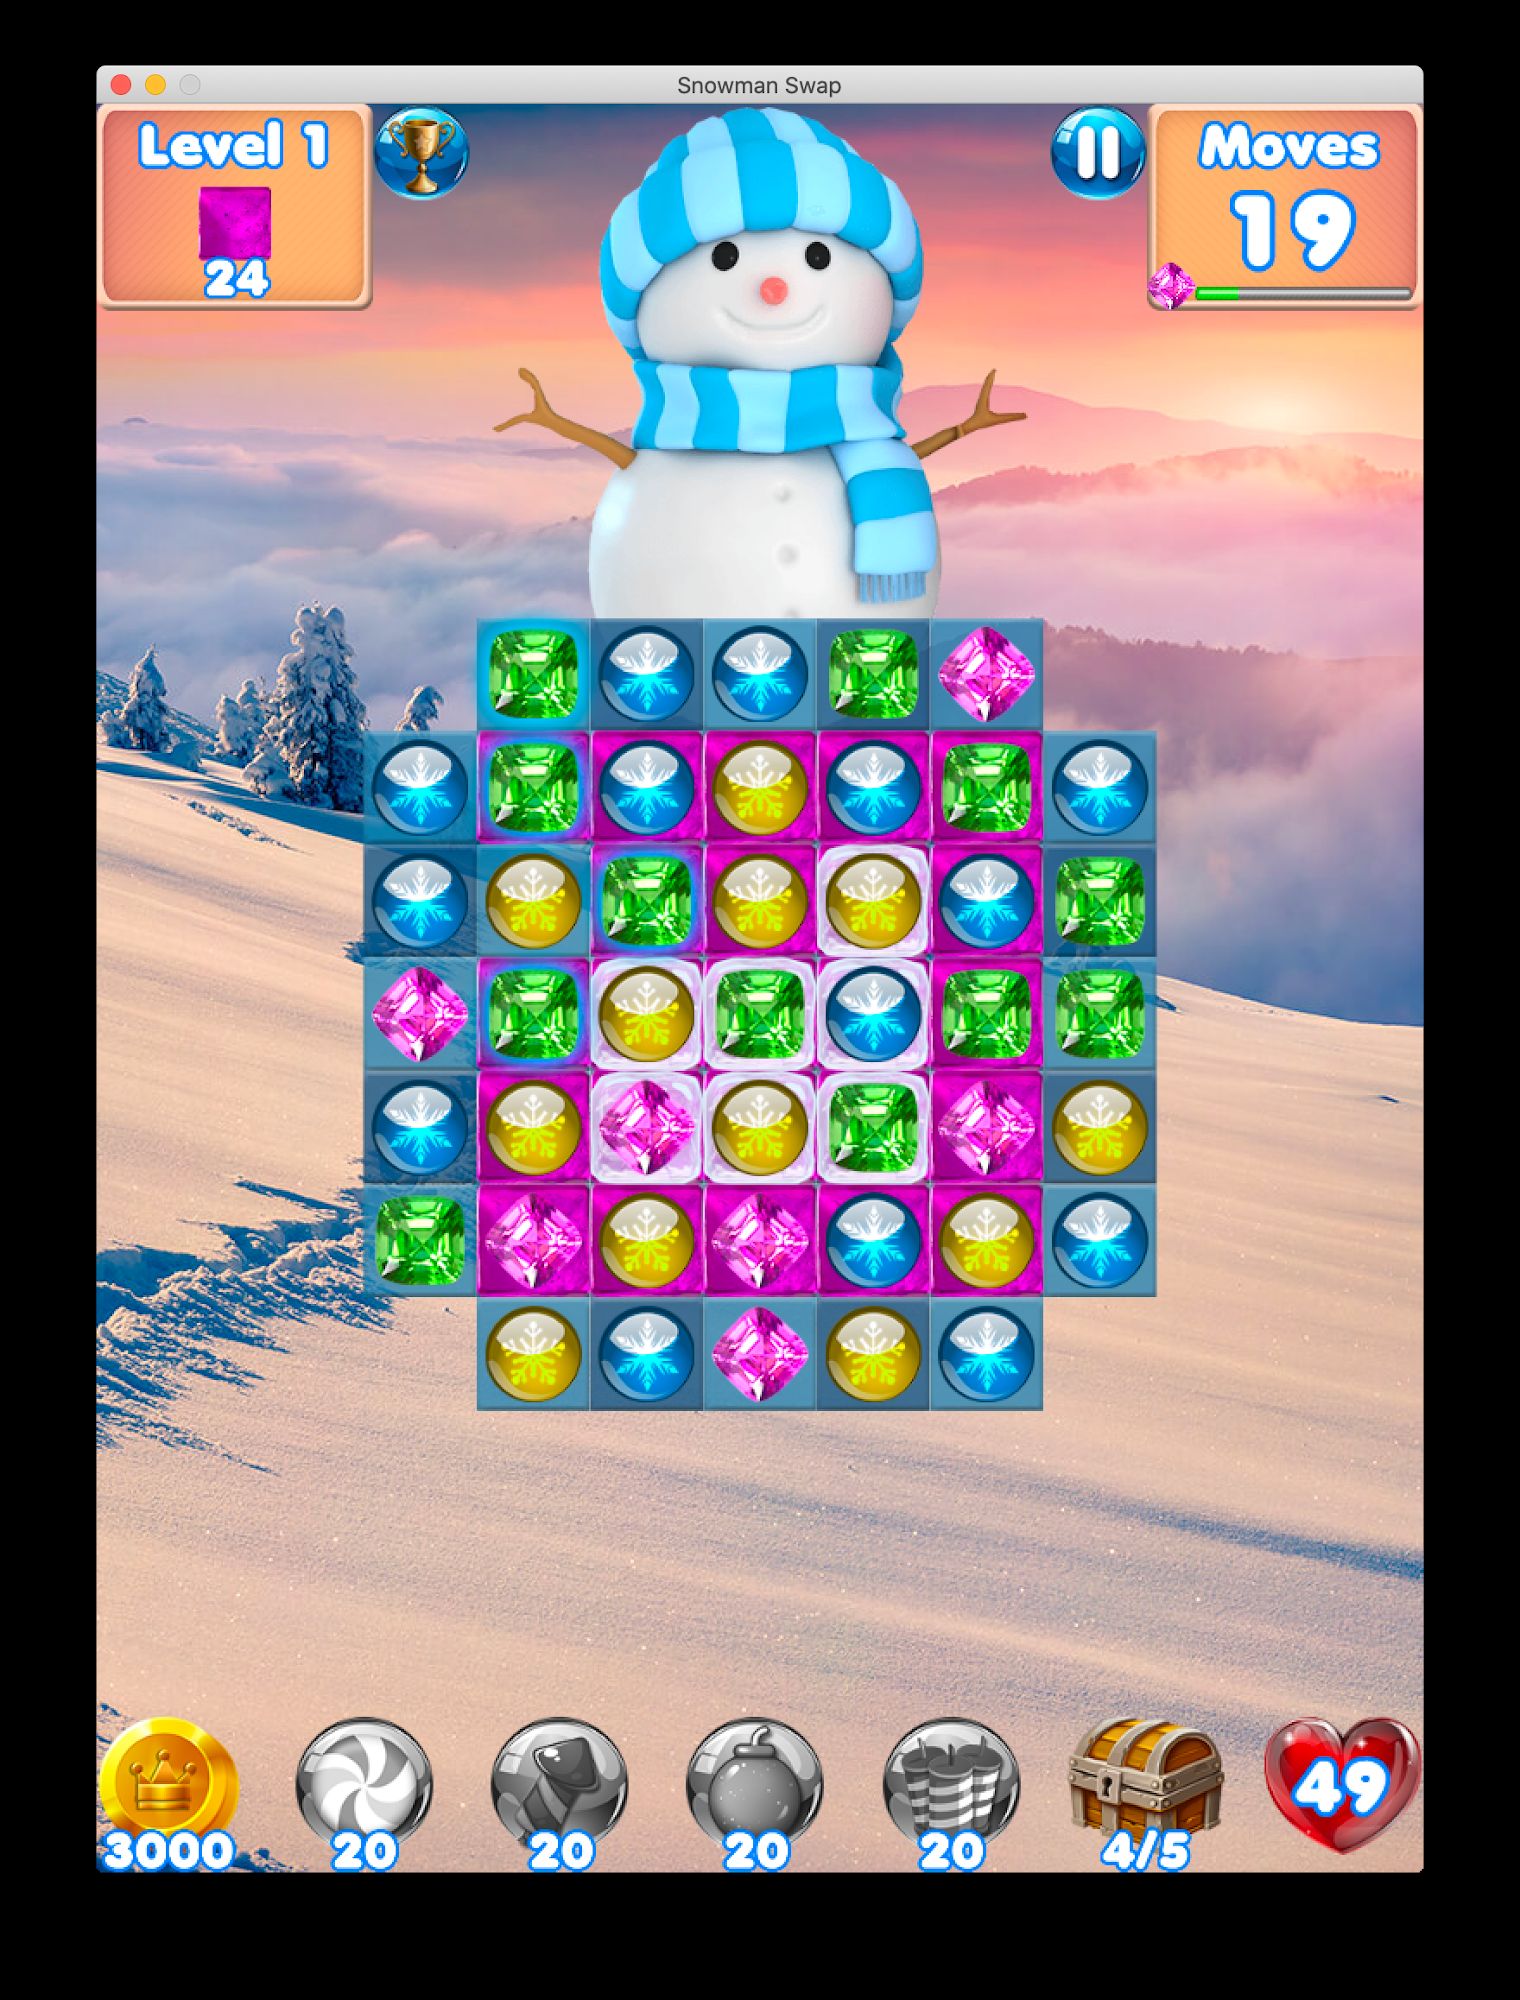 Скачать Snowman Swap - match 3 games and Christmas Games: Android Три в ряд игра на телефон и планшет.